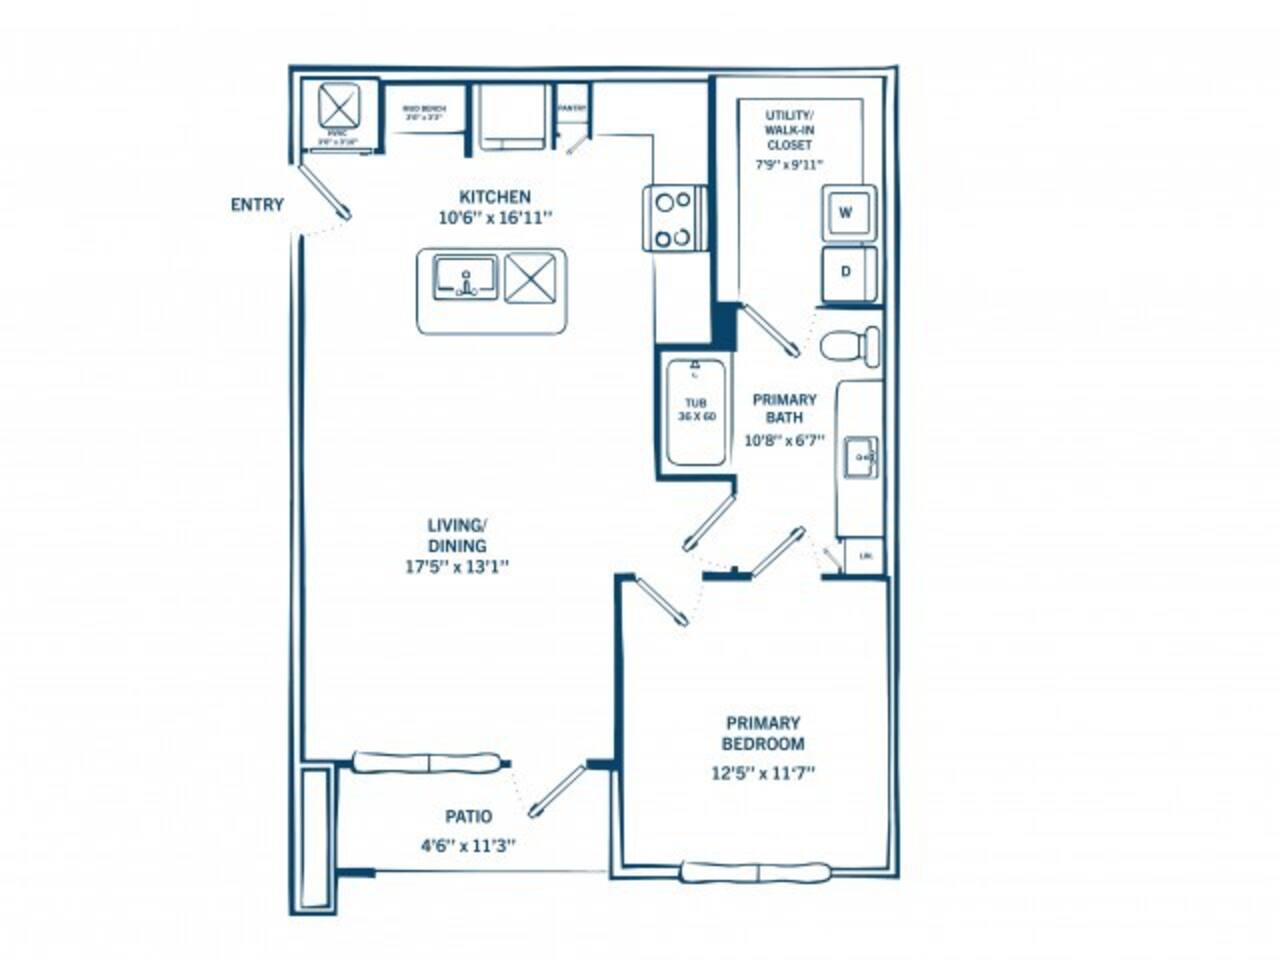 Floorplan diagram for A1B, showing 1 bedroom